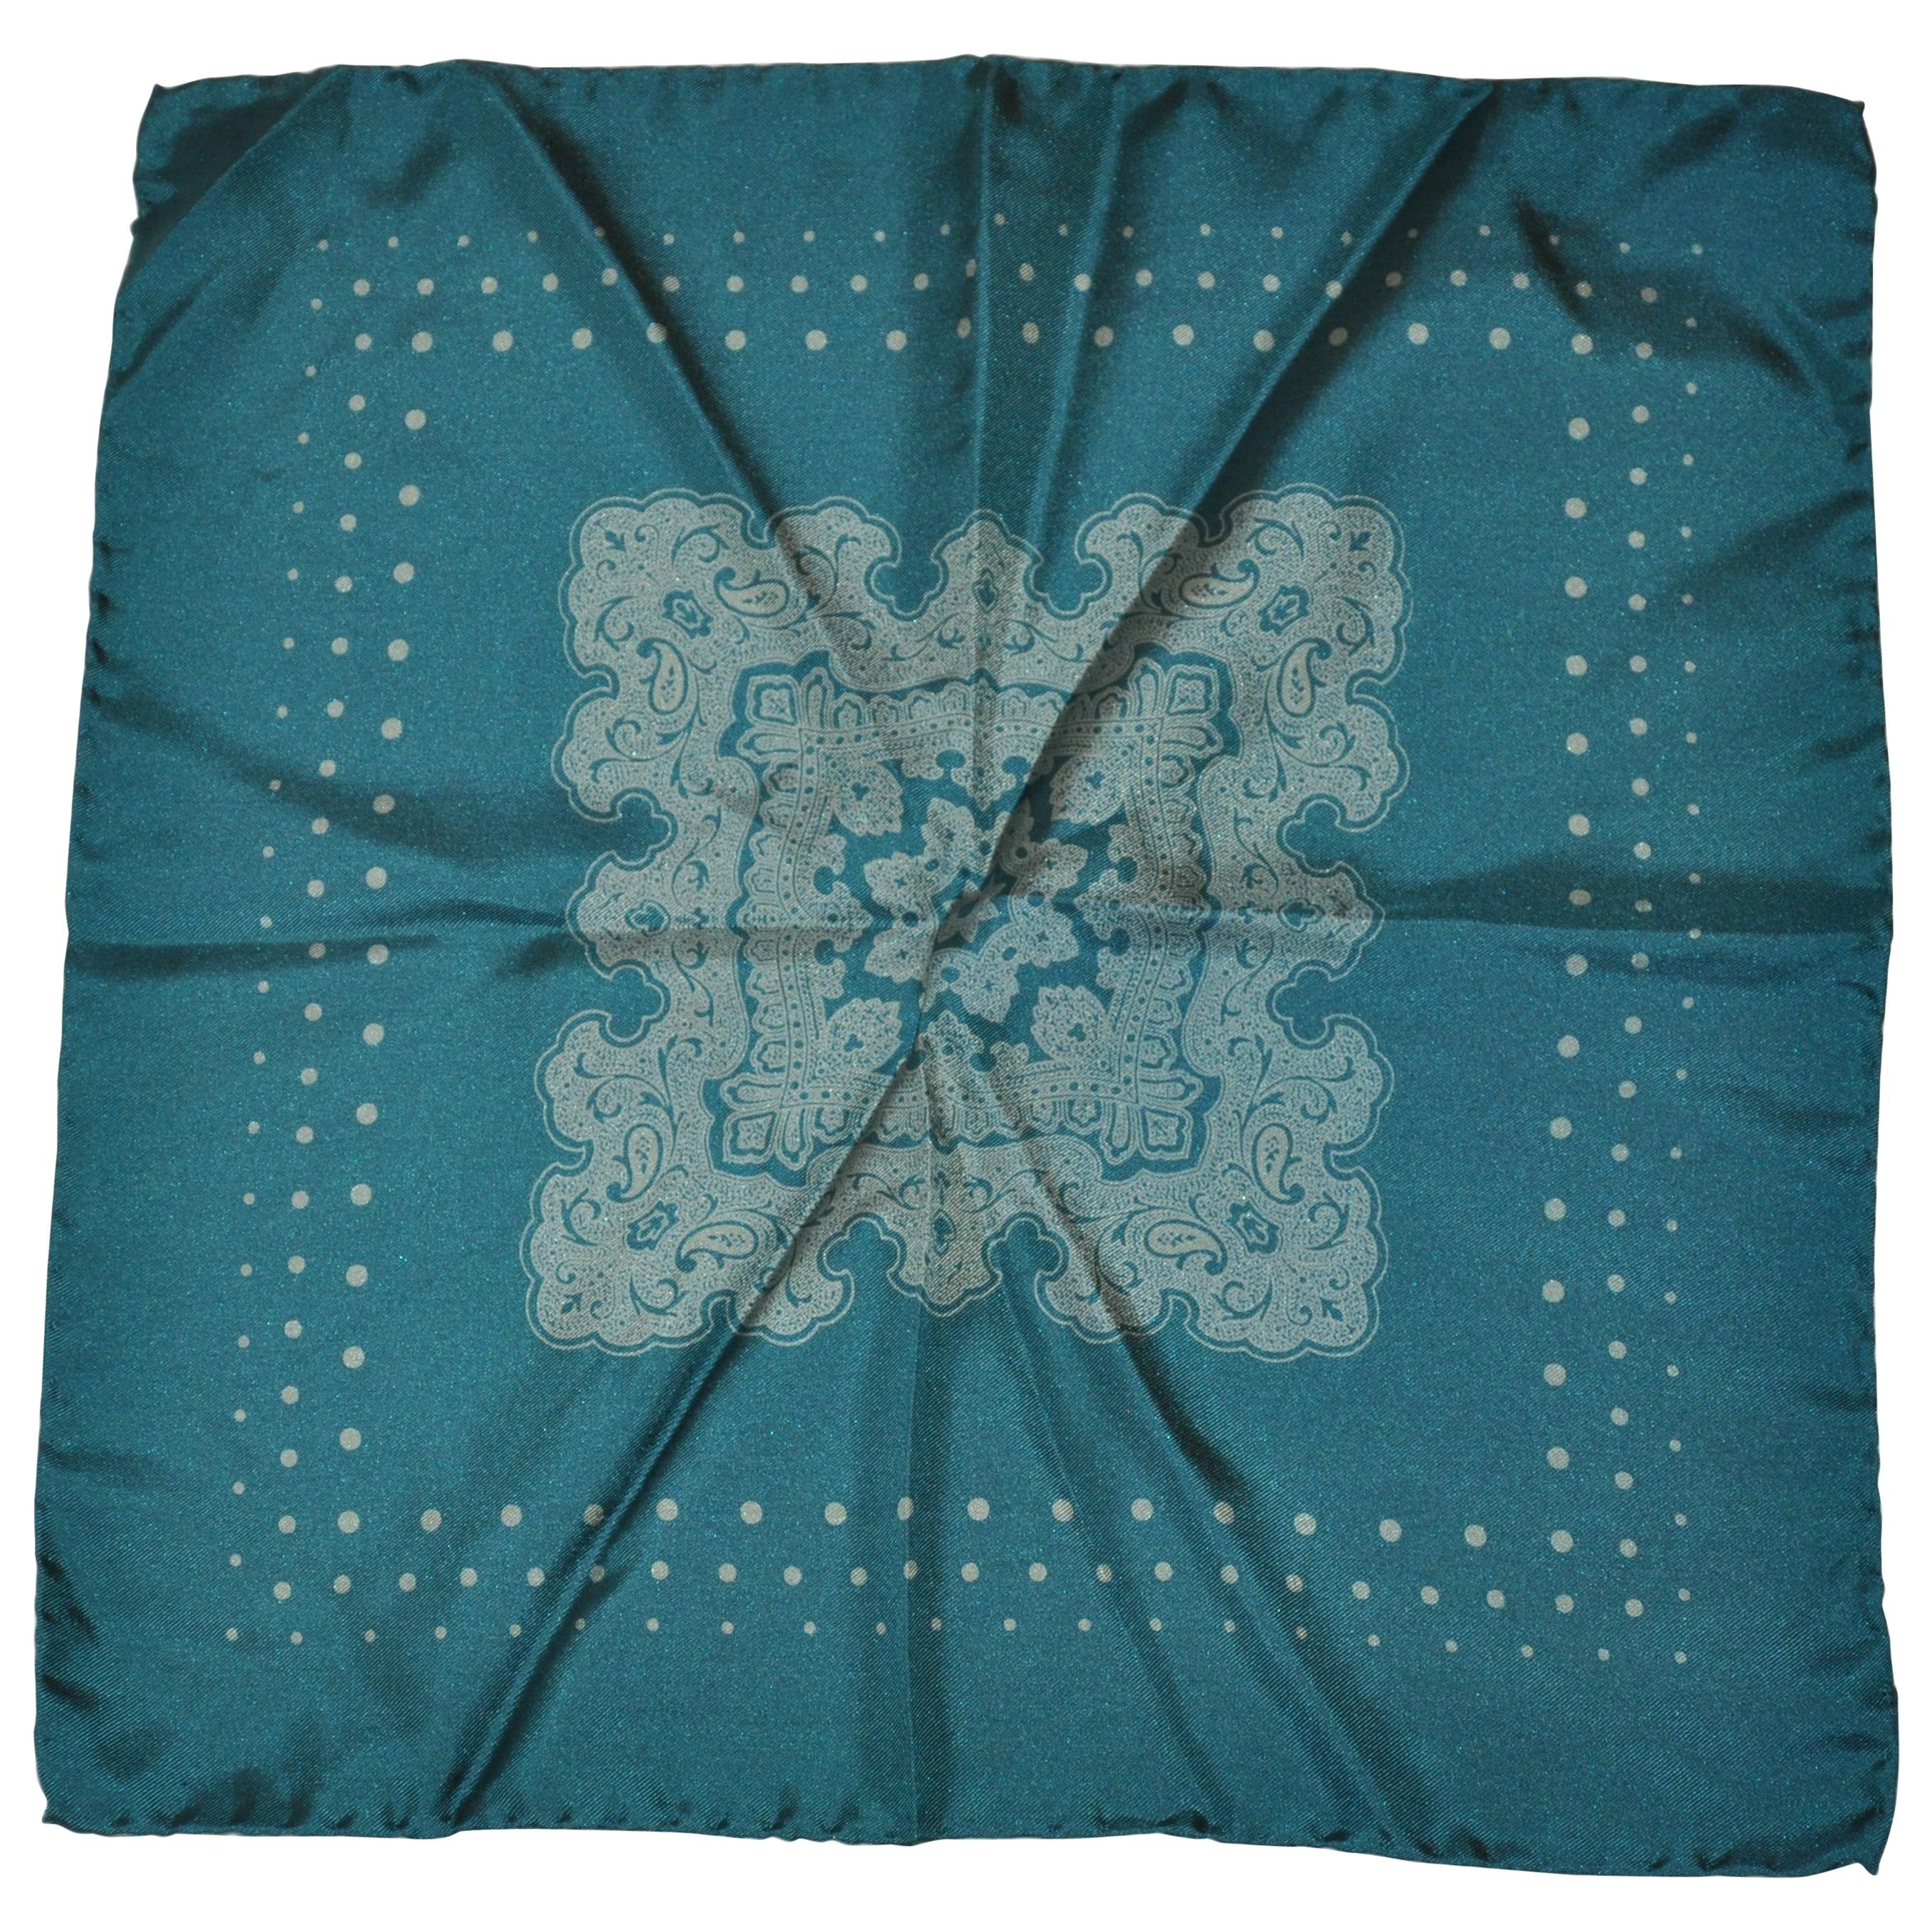 Turquoise-Green Palsey Center Silk Handkerchief